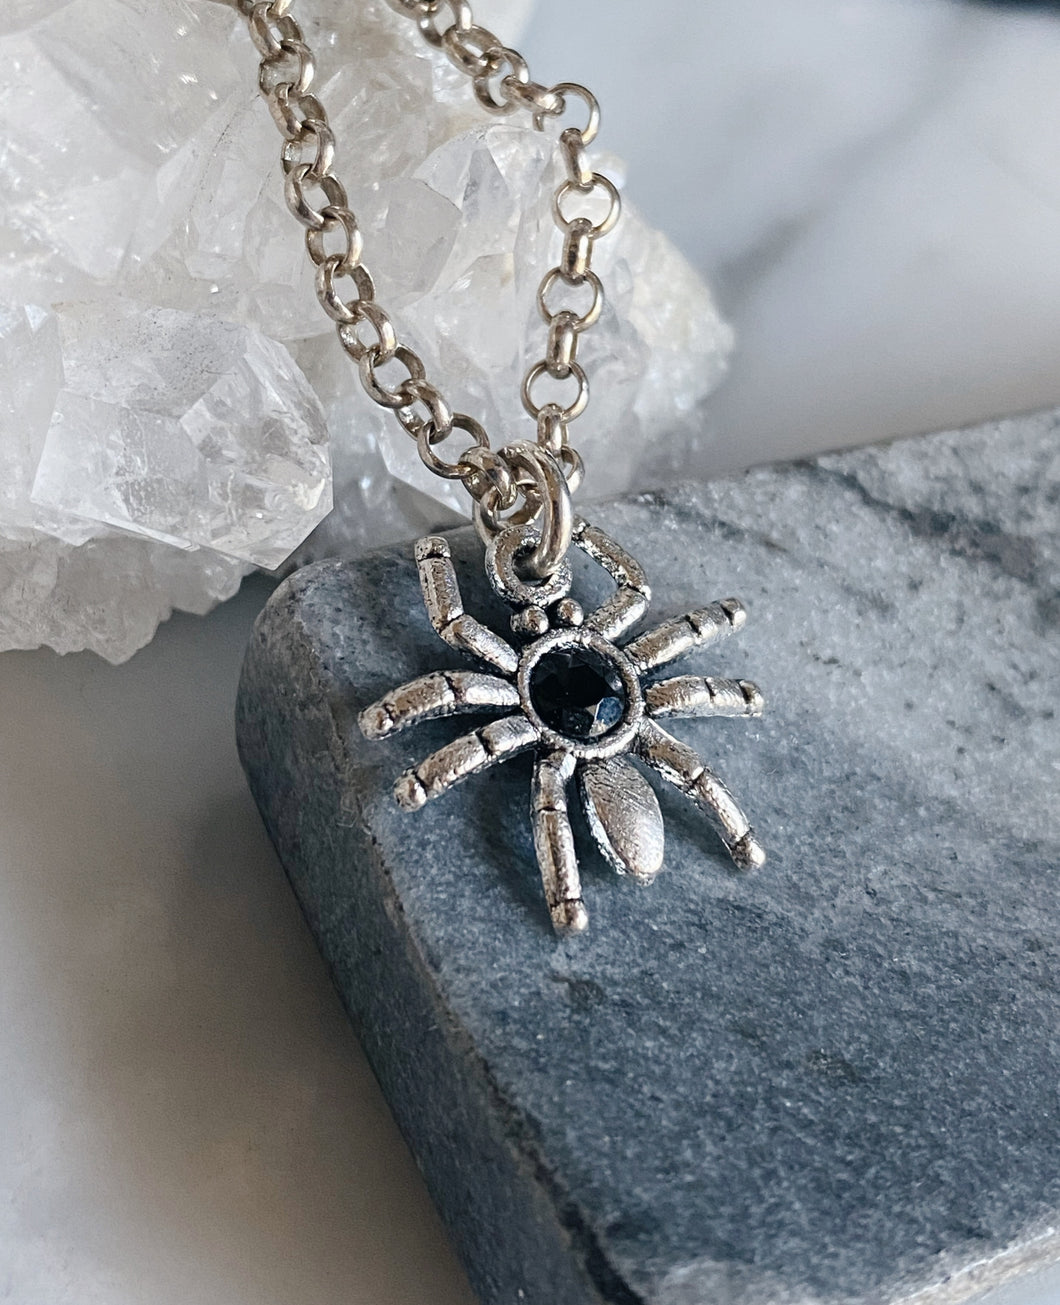 Hallow's Spider Necklace